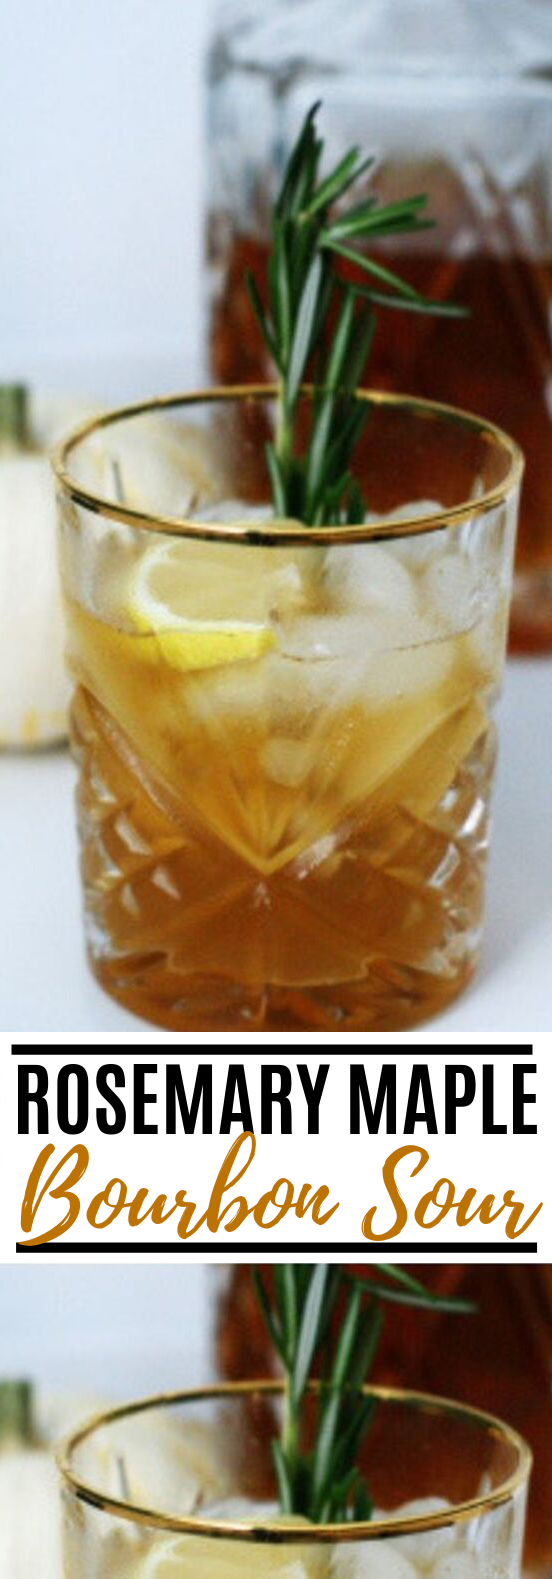 Rosemary Maple Bourbon Sour #drinks #alcohol